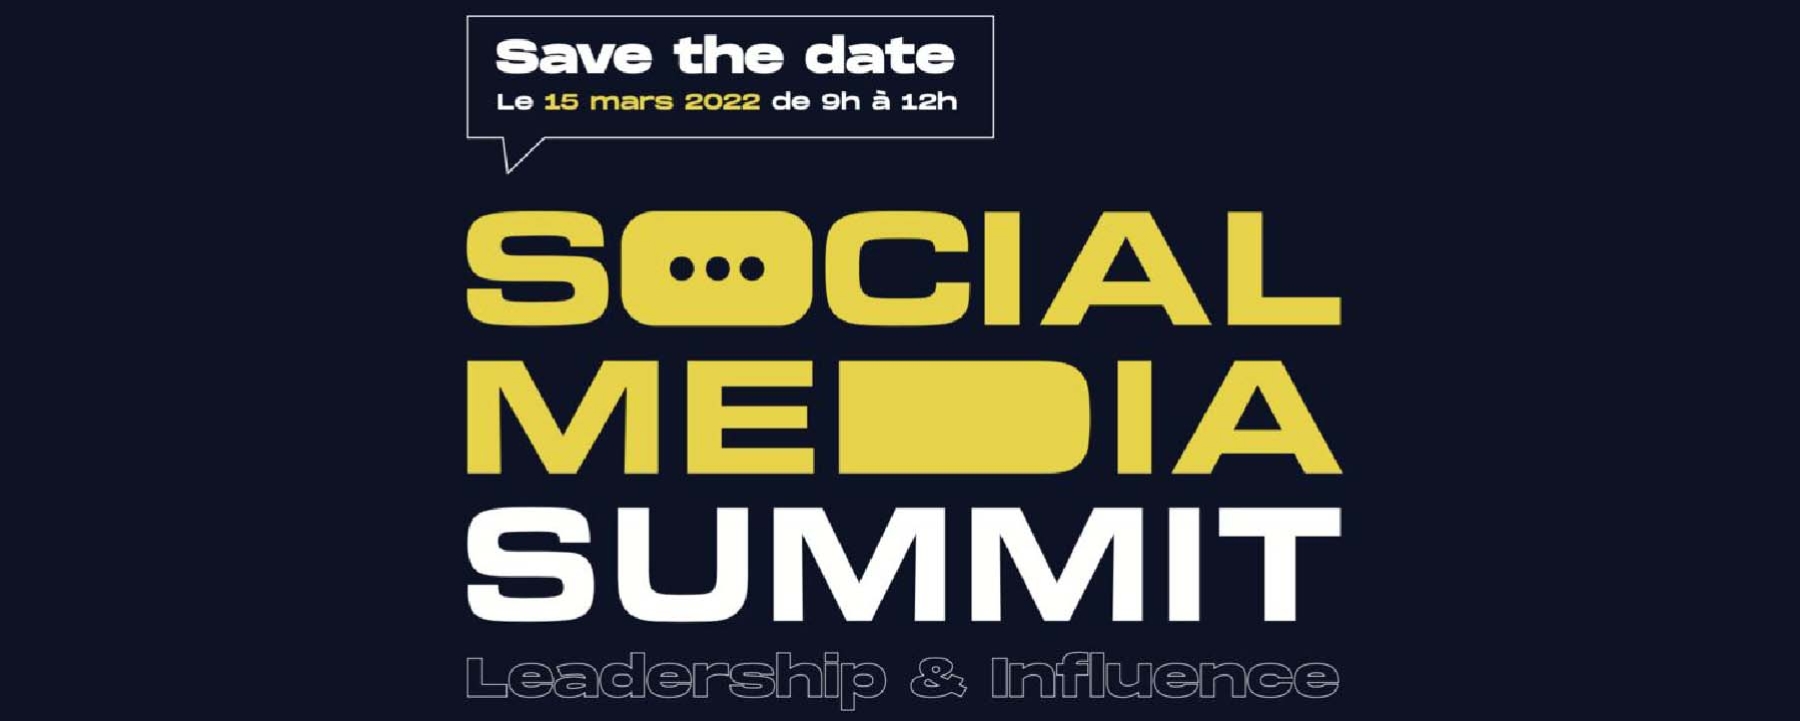 Social Media Summit : Leadership & Influence